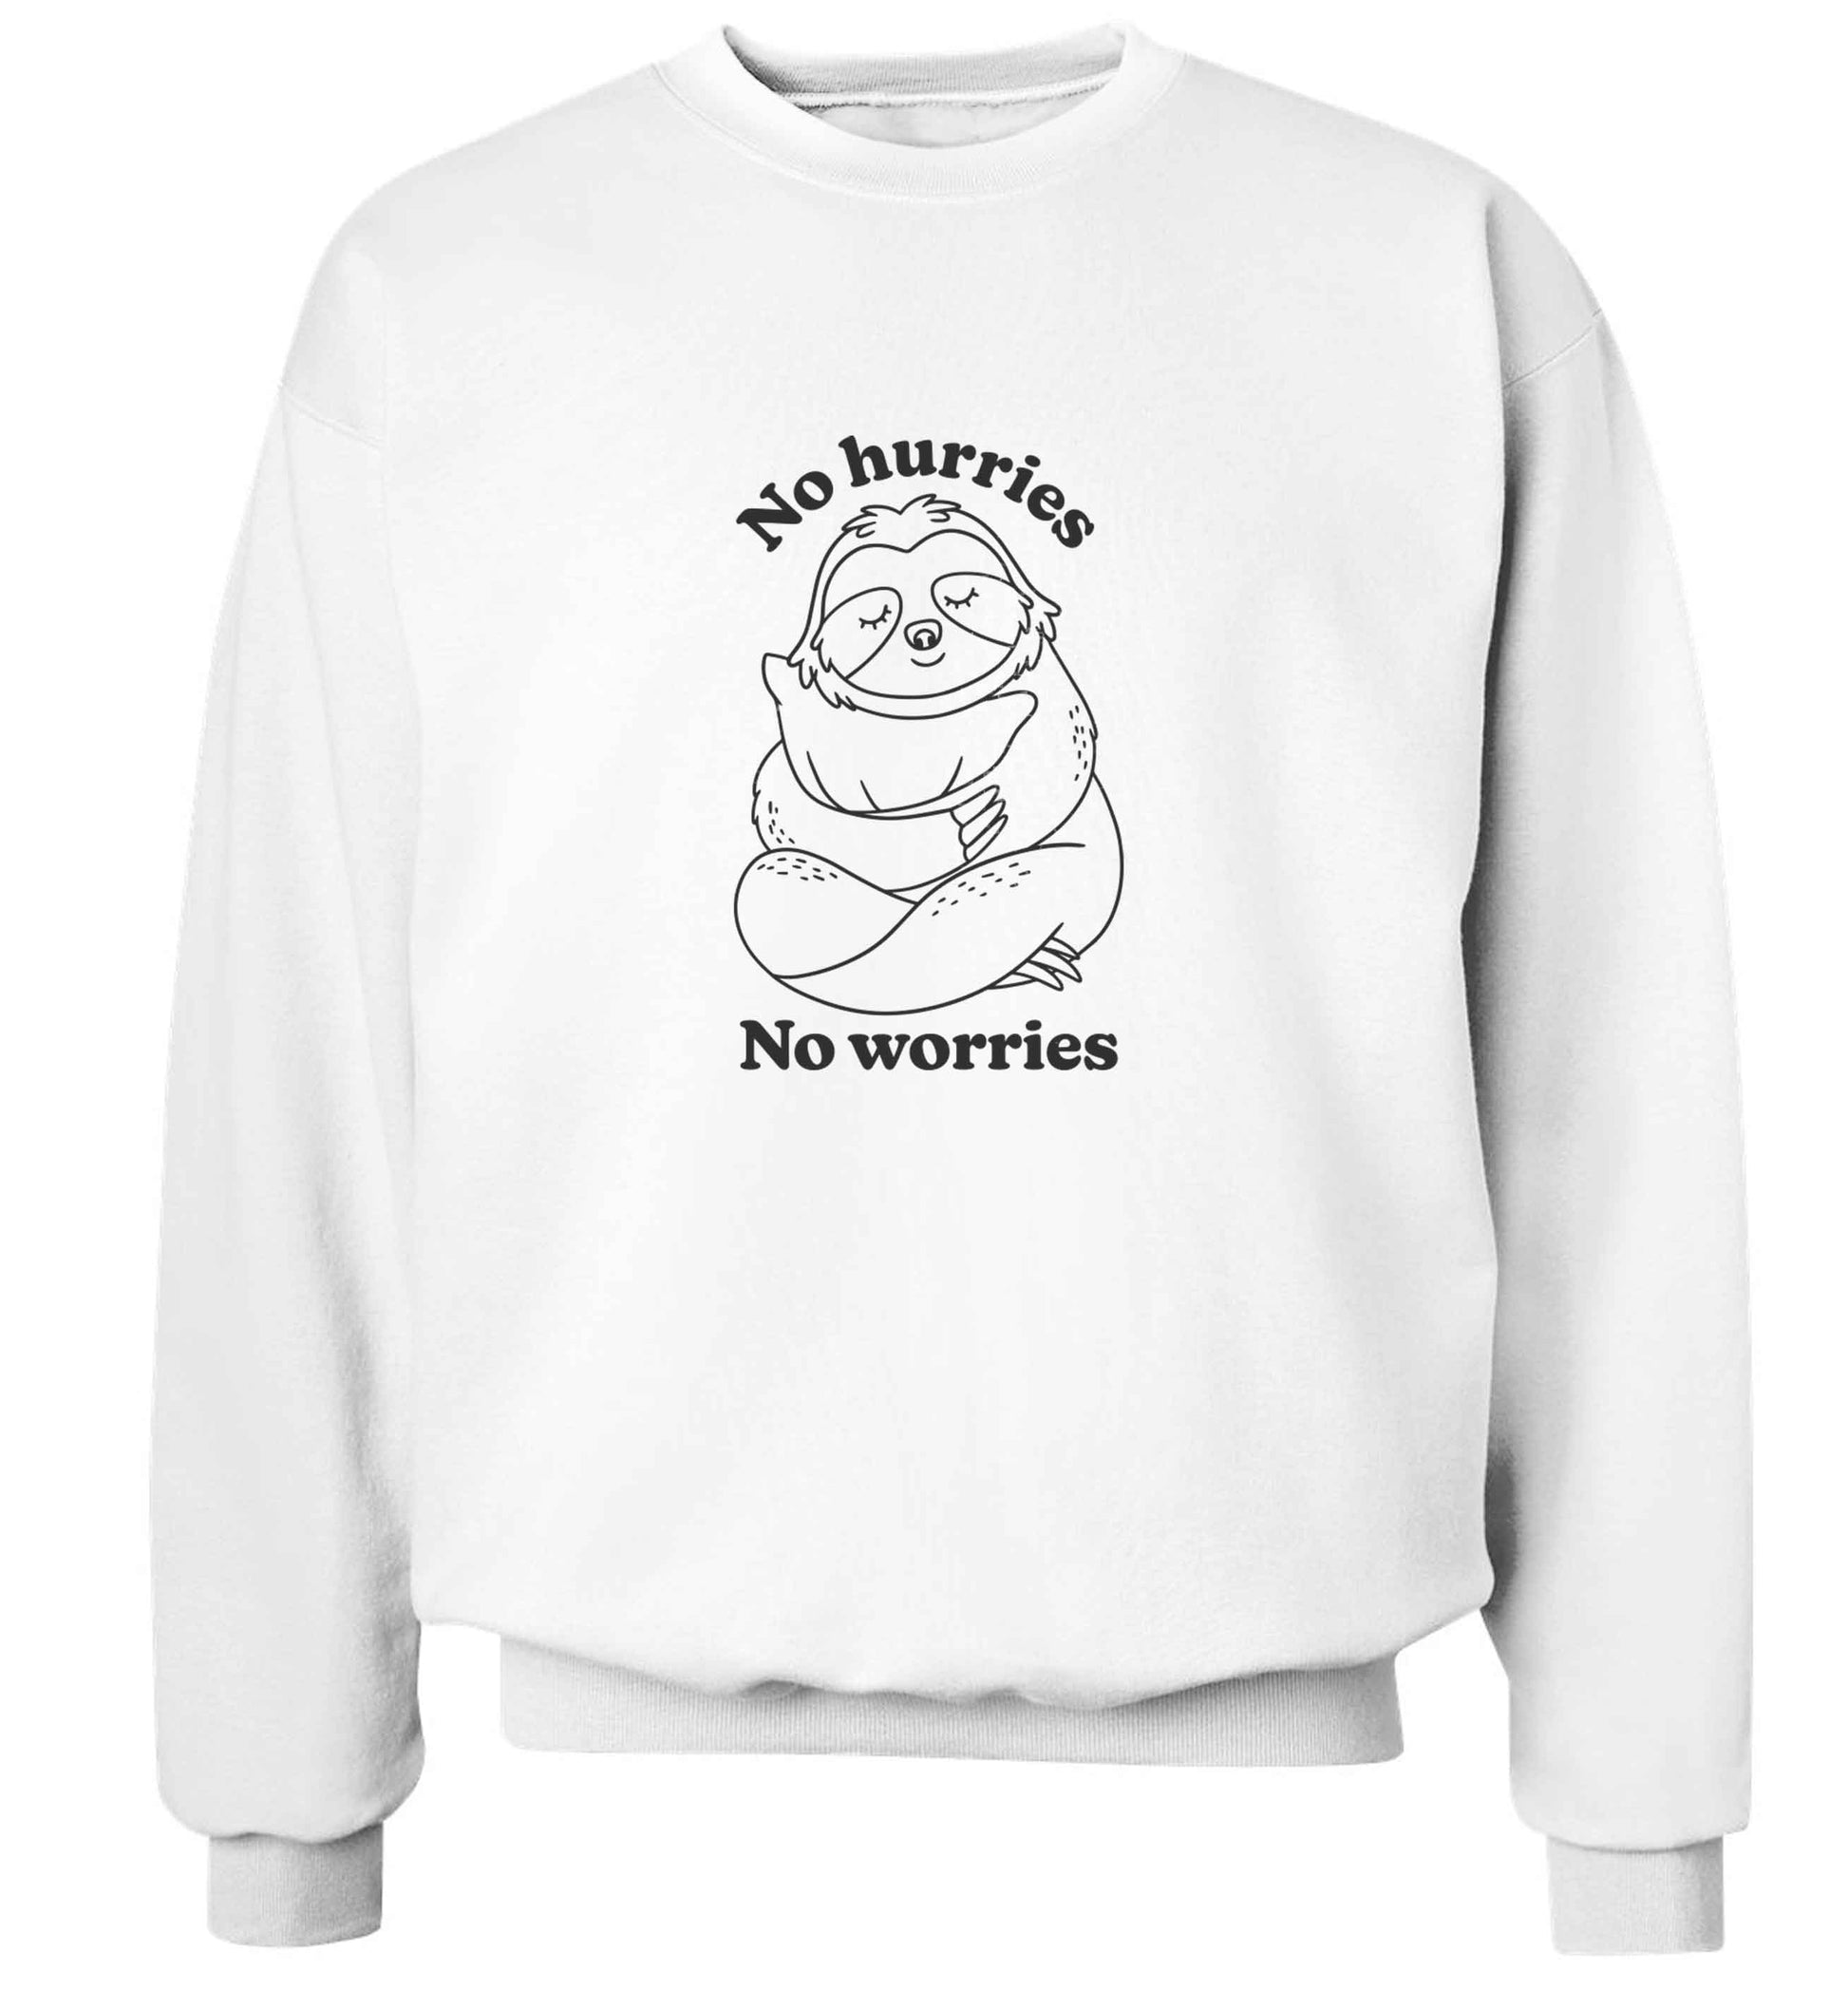 No hurries no worries adult's unisex white sweater 2XL